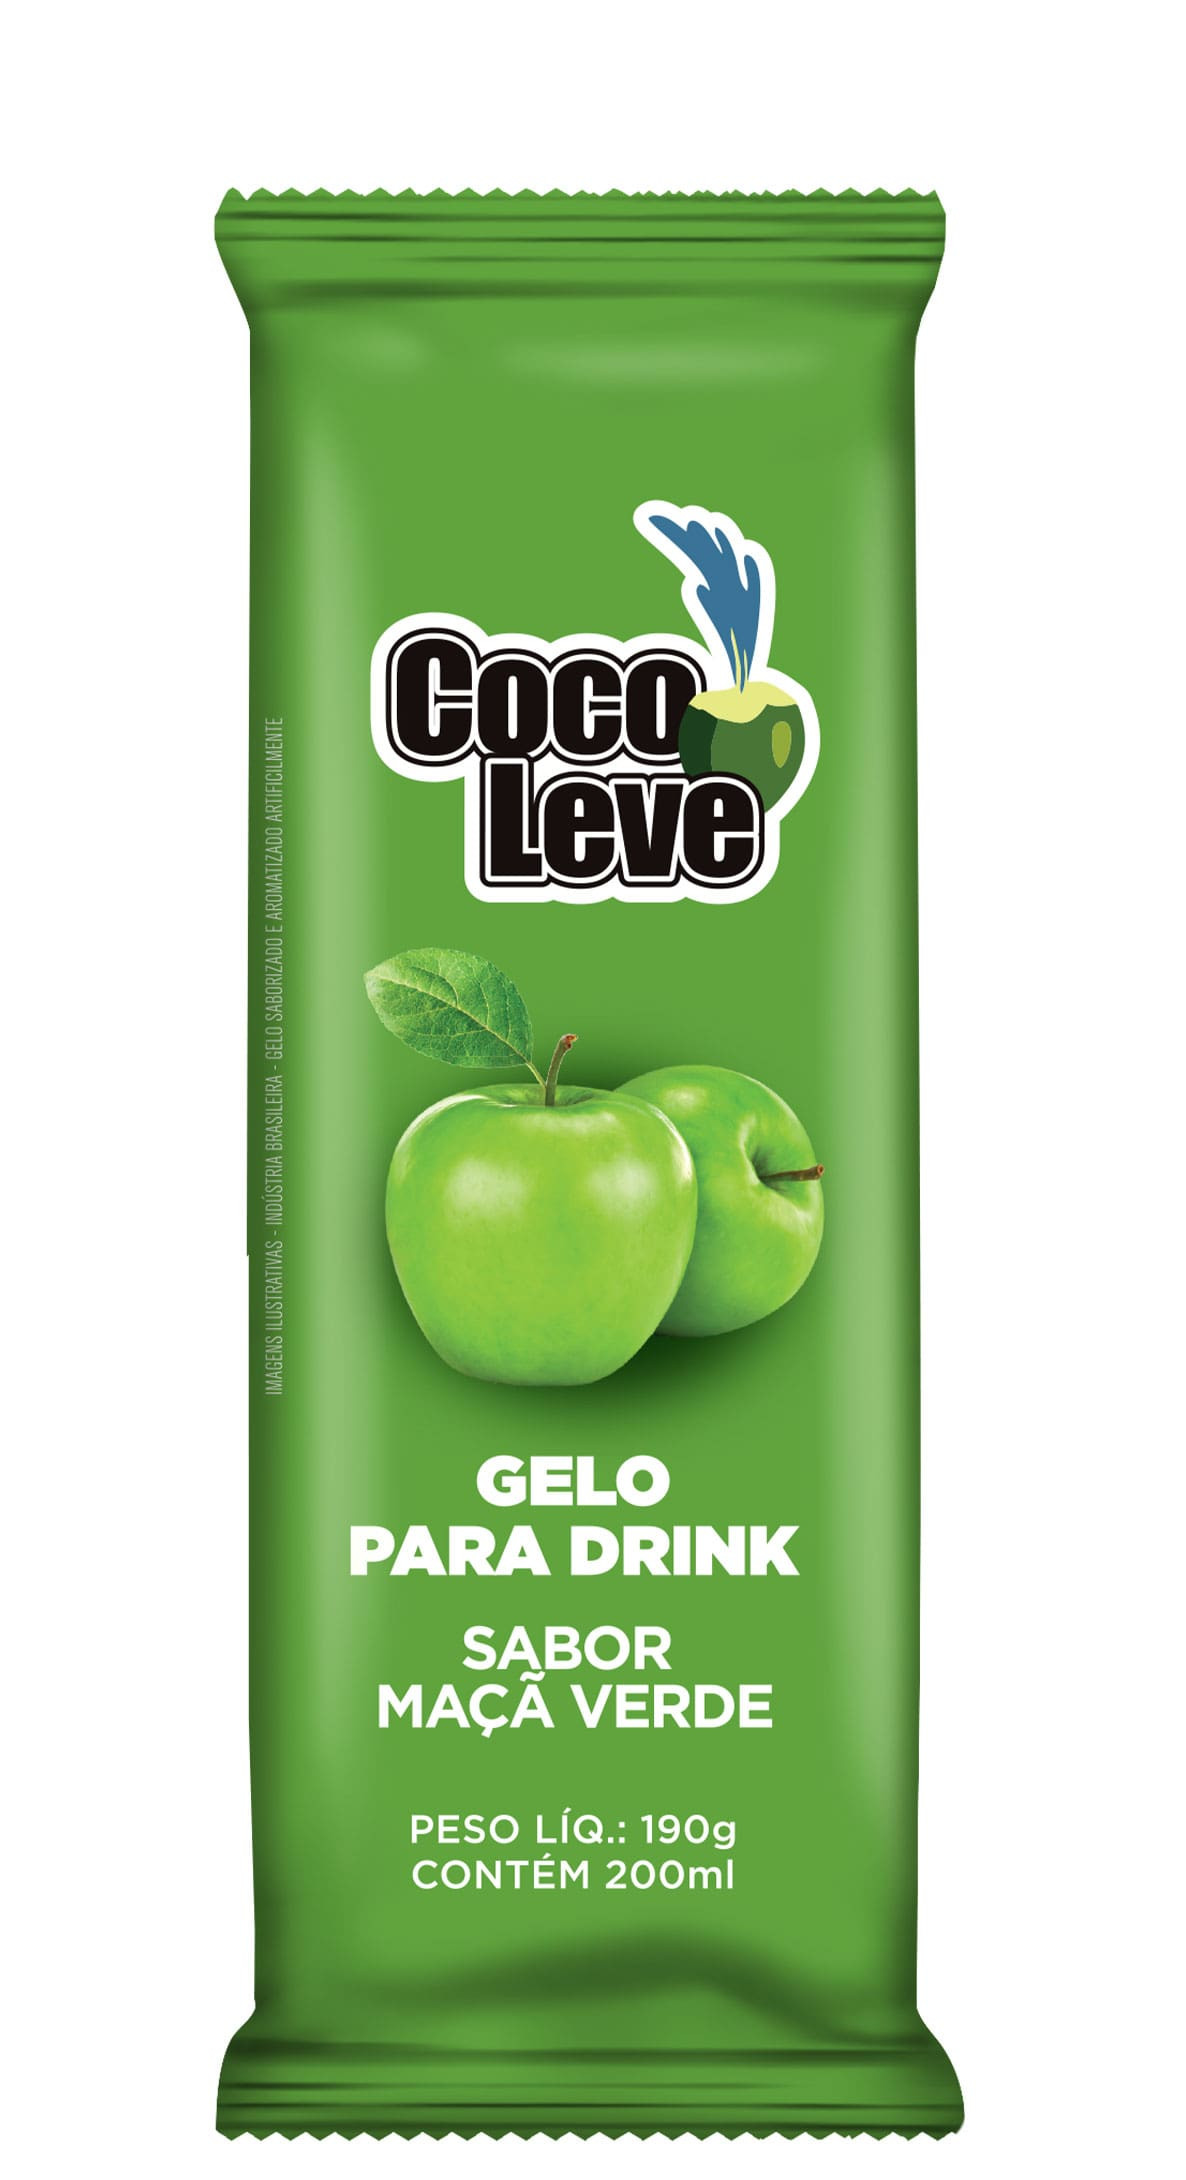 Coco Leve  Produtos - Coco Leve